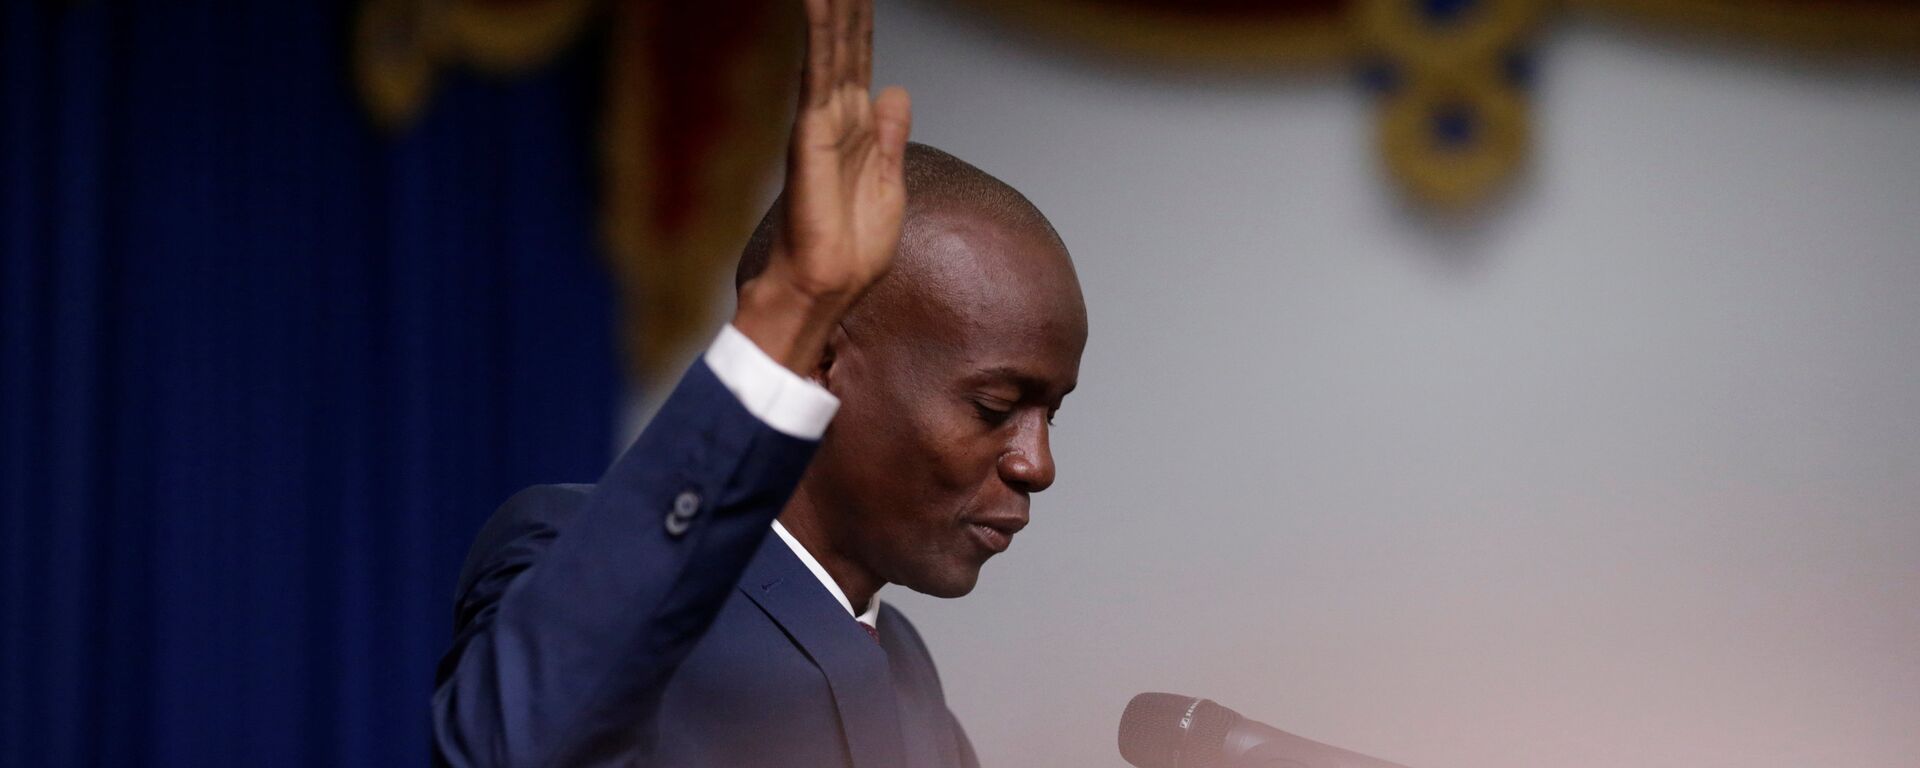 Haitian President Jovenel Moise takes the oath of office during his inauguration in Port-au-Prince, Haiti February 7, 2017 - Sputnik Mundo, 1920, 07.07.2021